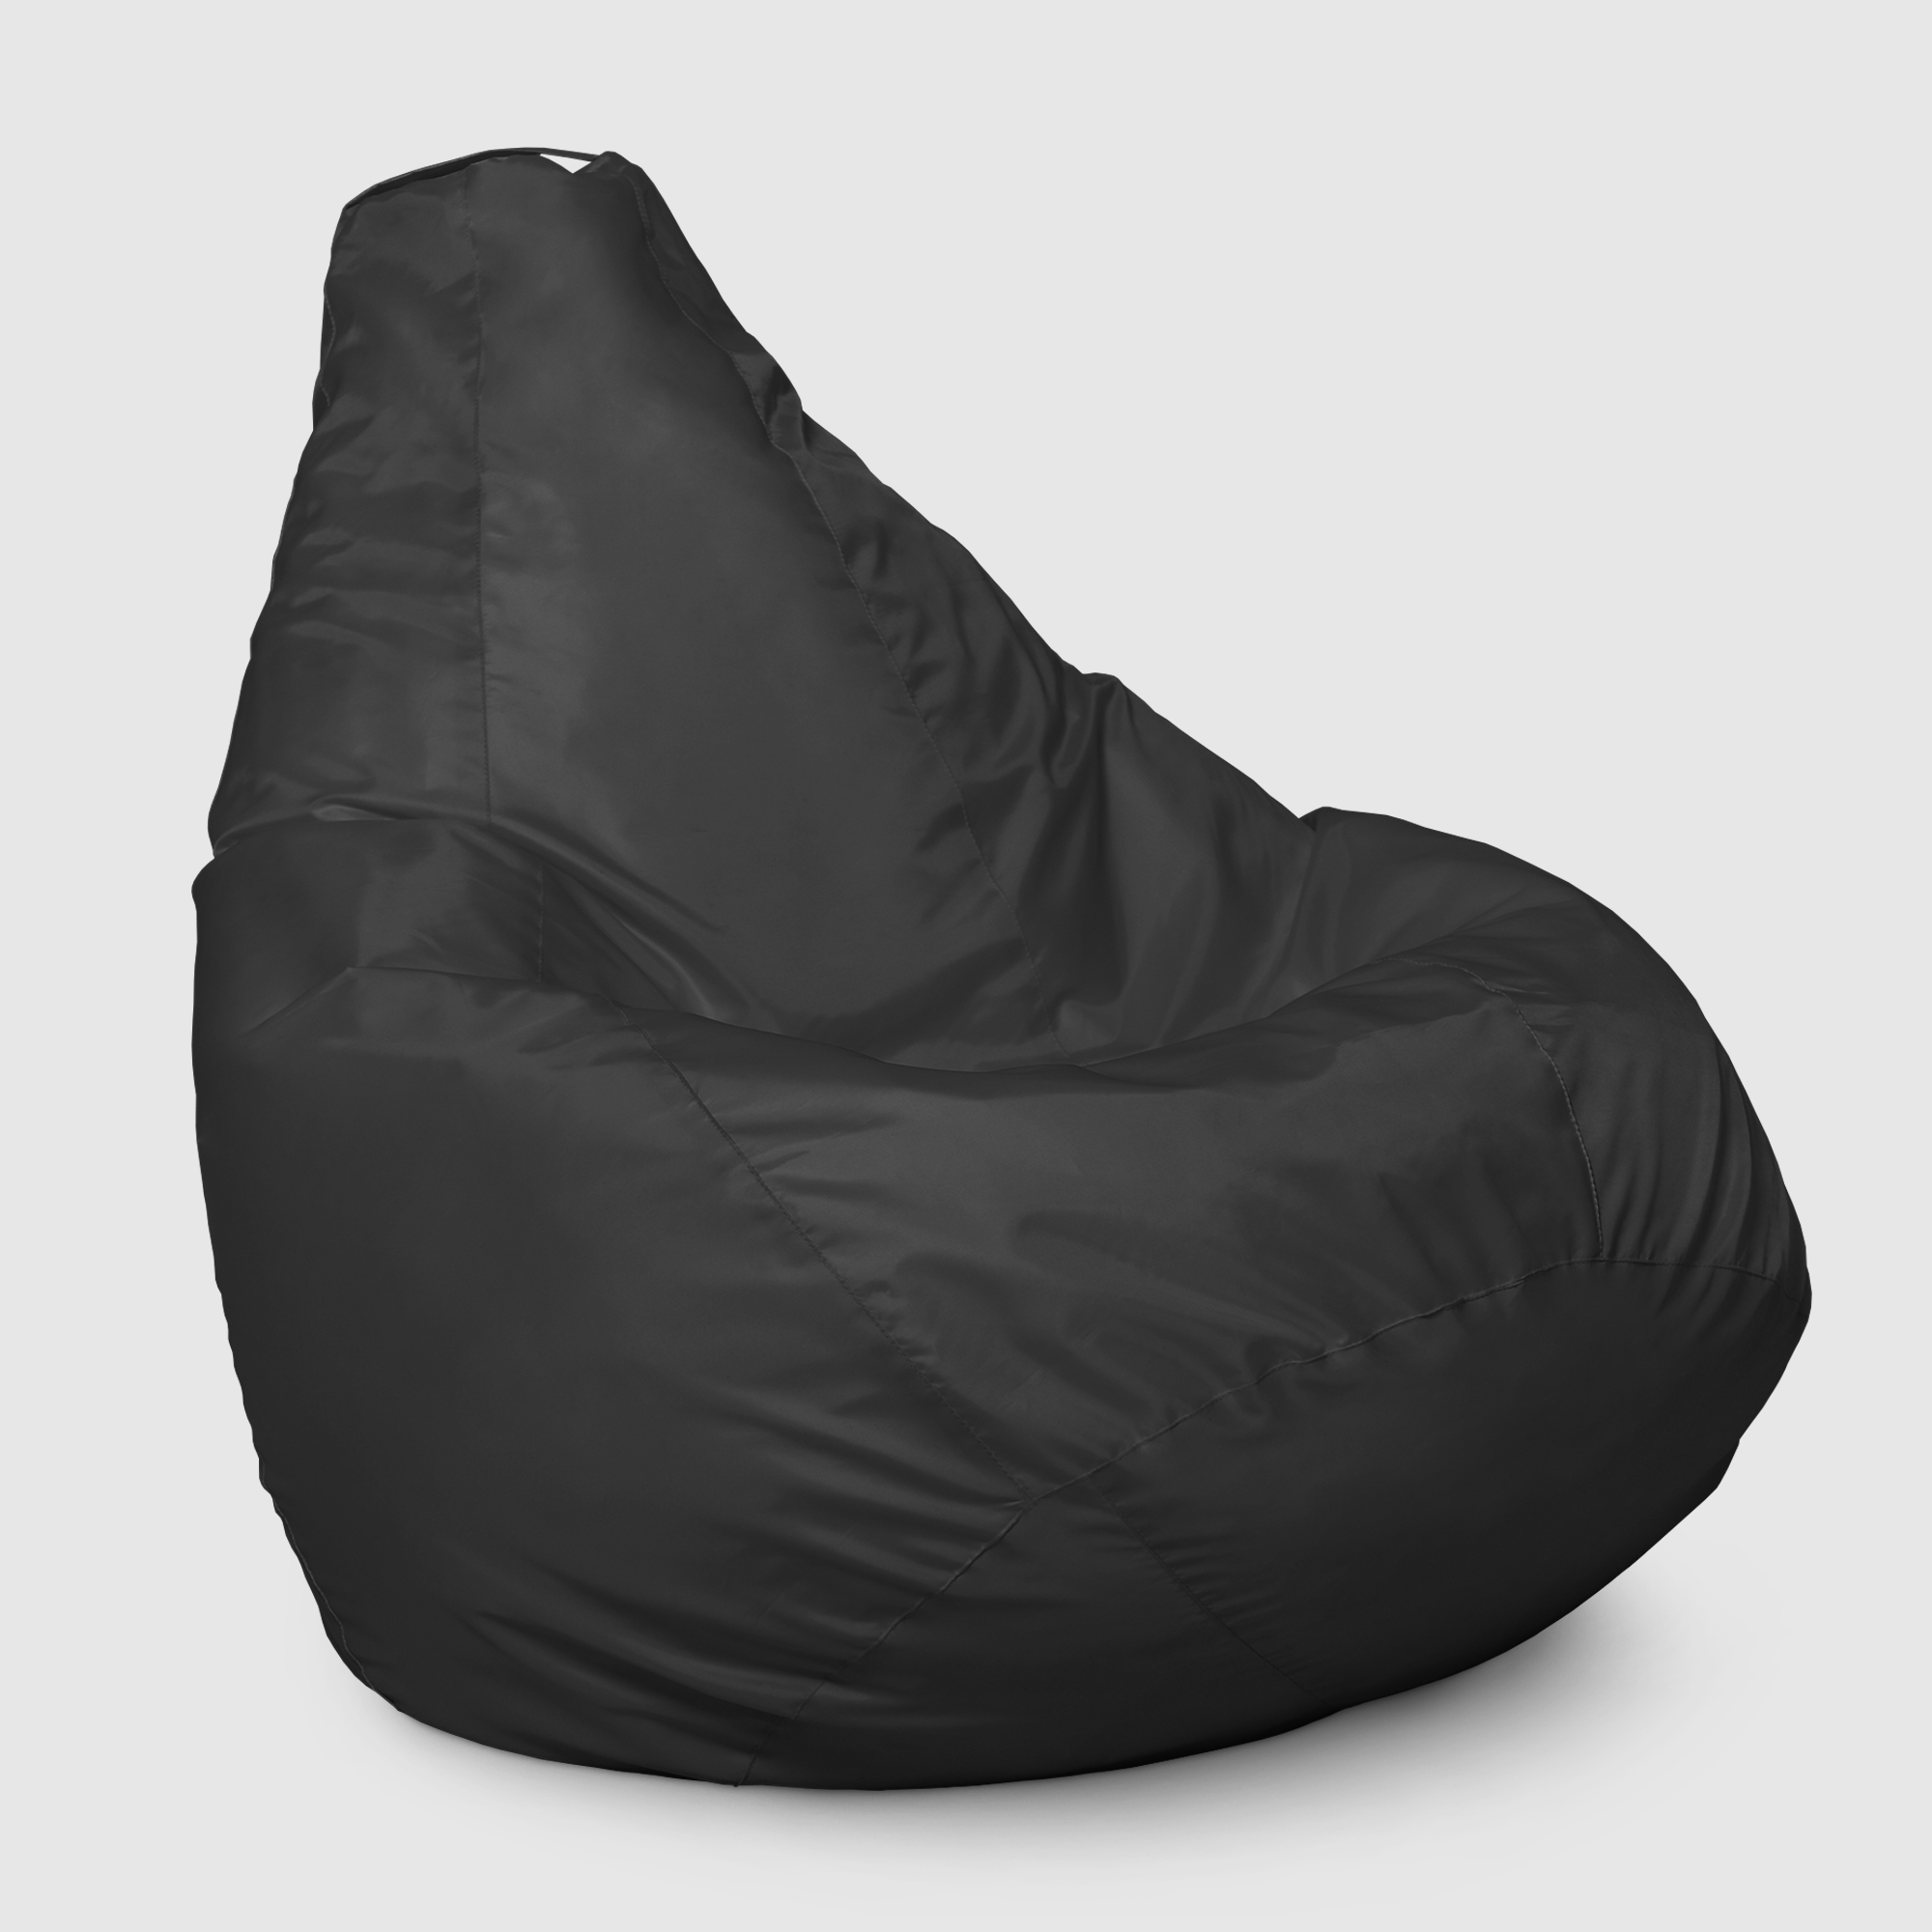 Кресло мешок Dreambag Меган xl черное 85х85х125 см кресло мешок dreambag меган xl белое 85х85х125см